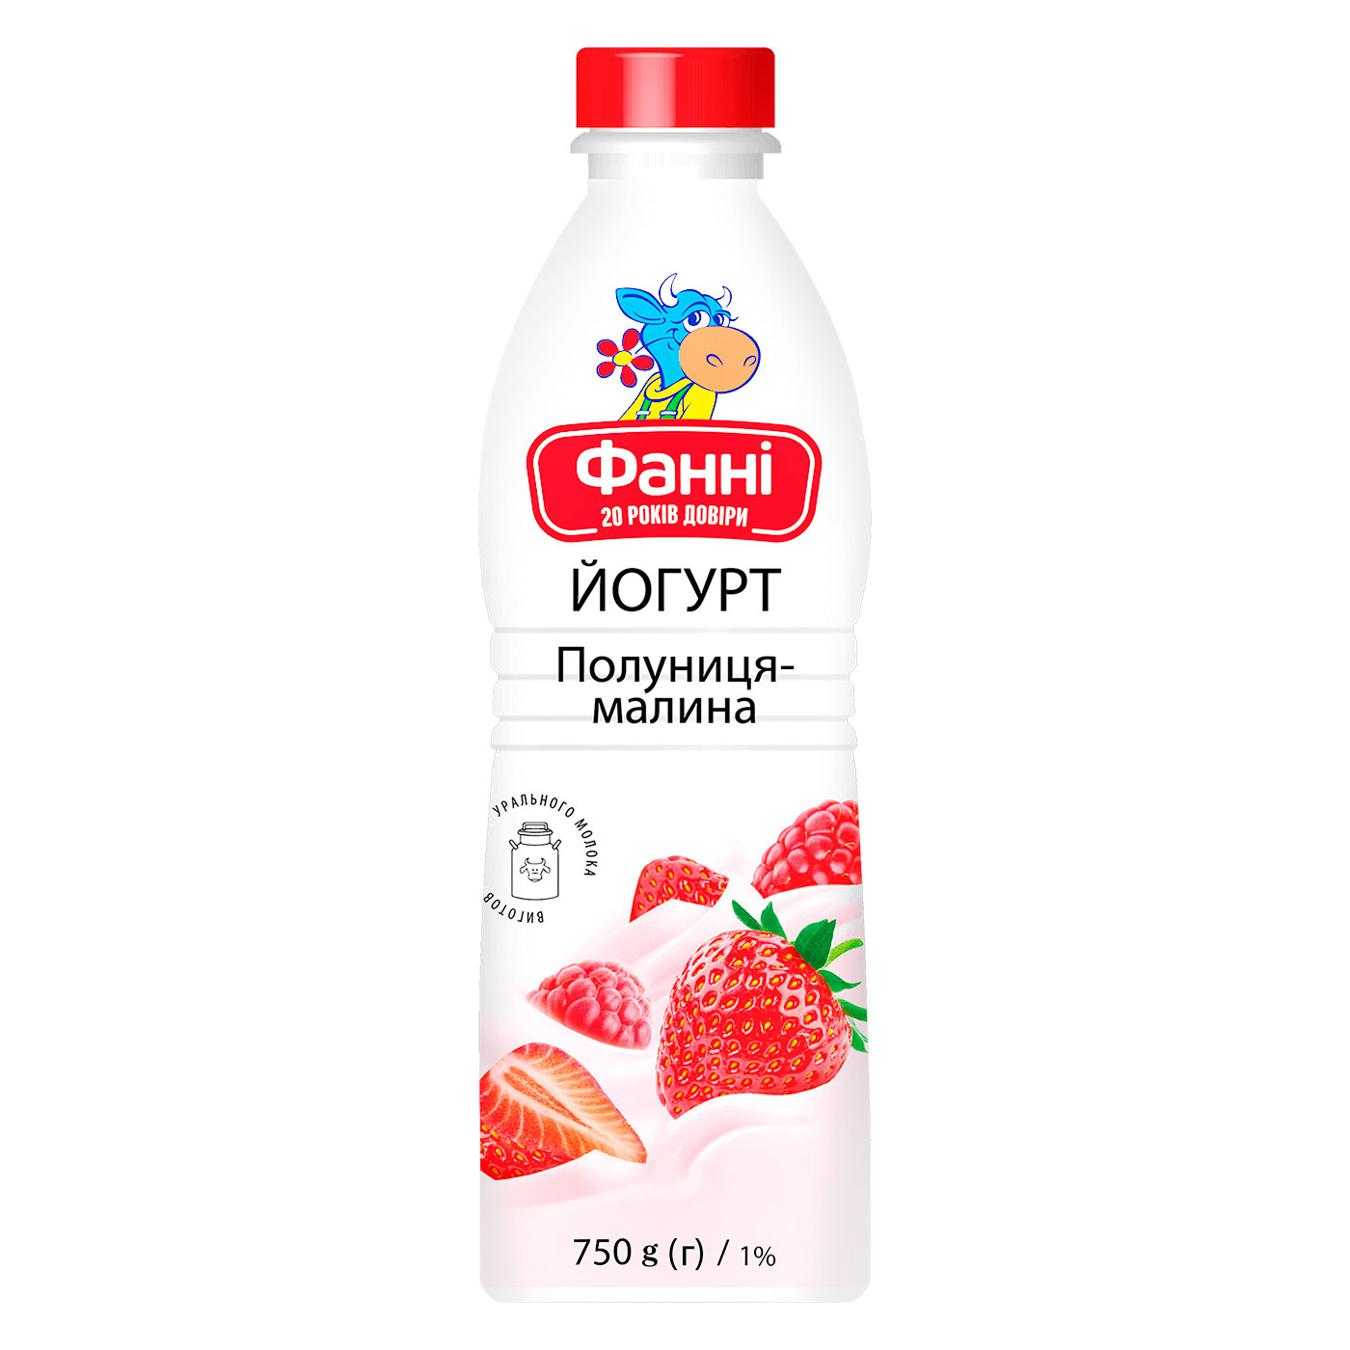 Fanny yogurt with strawberry-raspberry filling drinking bottle 1% 750g